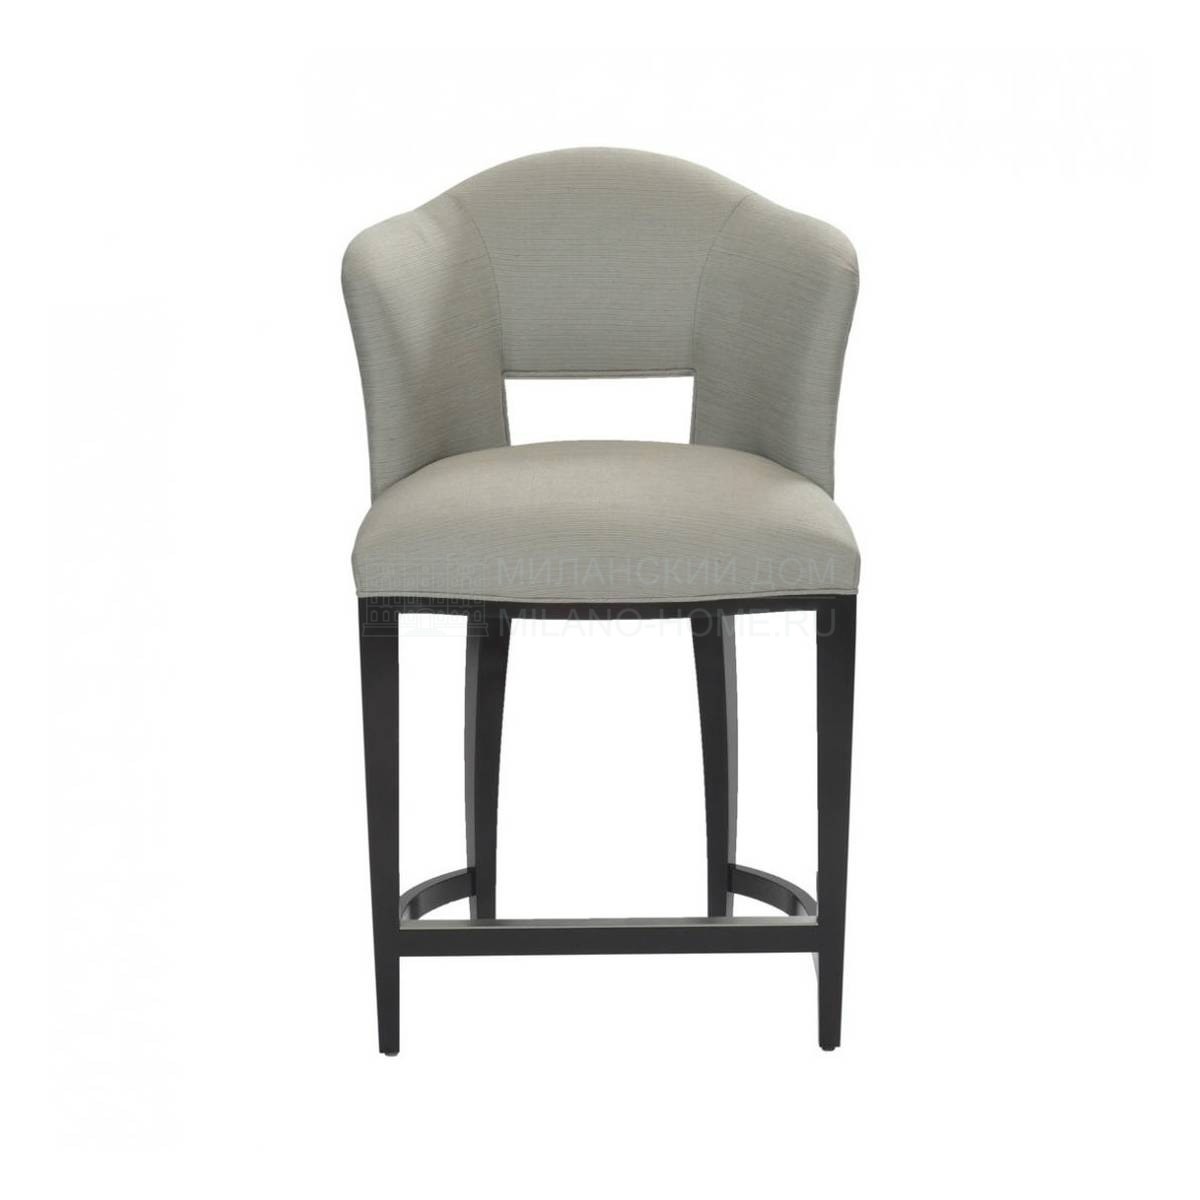 Полубарный стул Trillion Counter Chair из Италии фабрики RUBELLI Casa